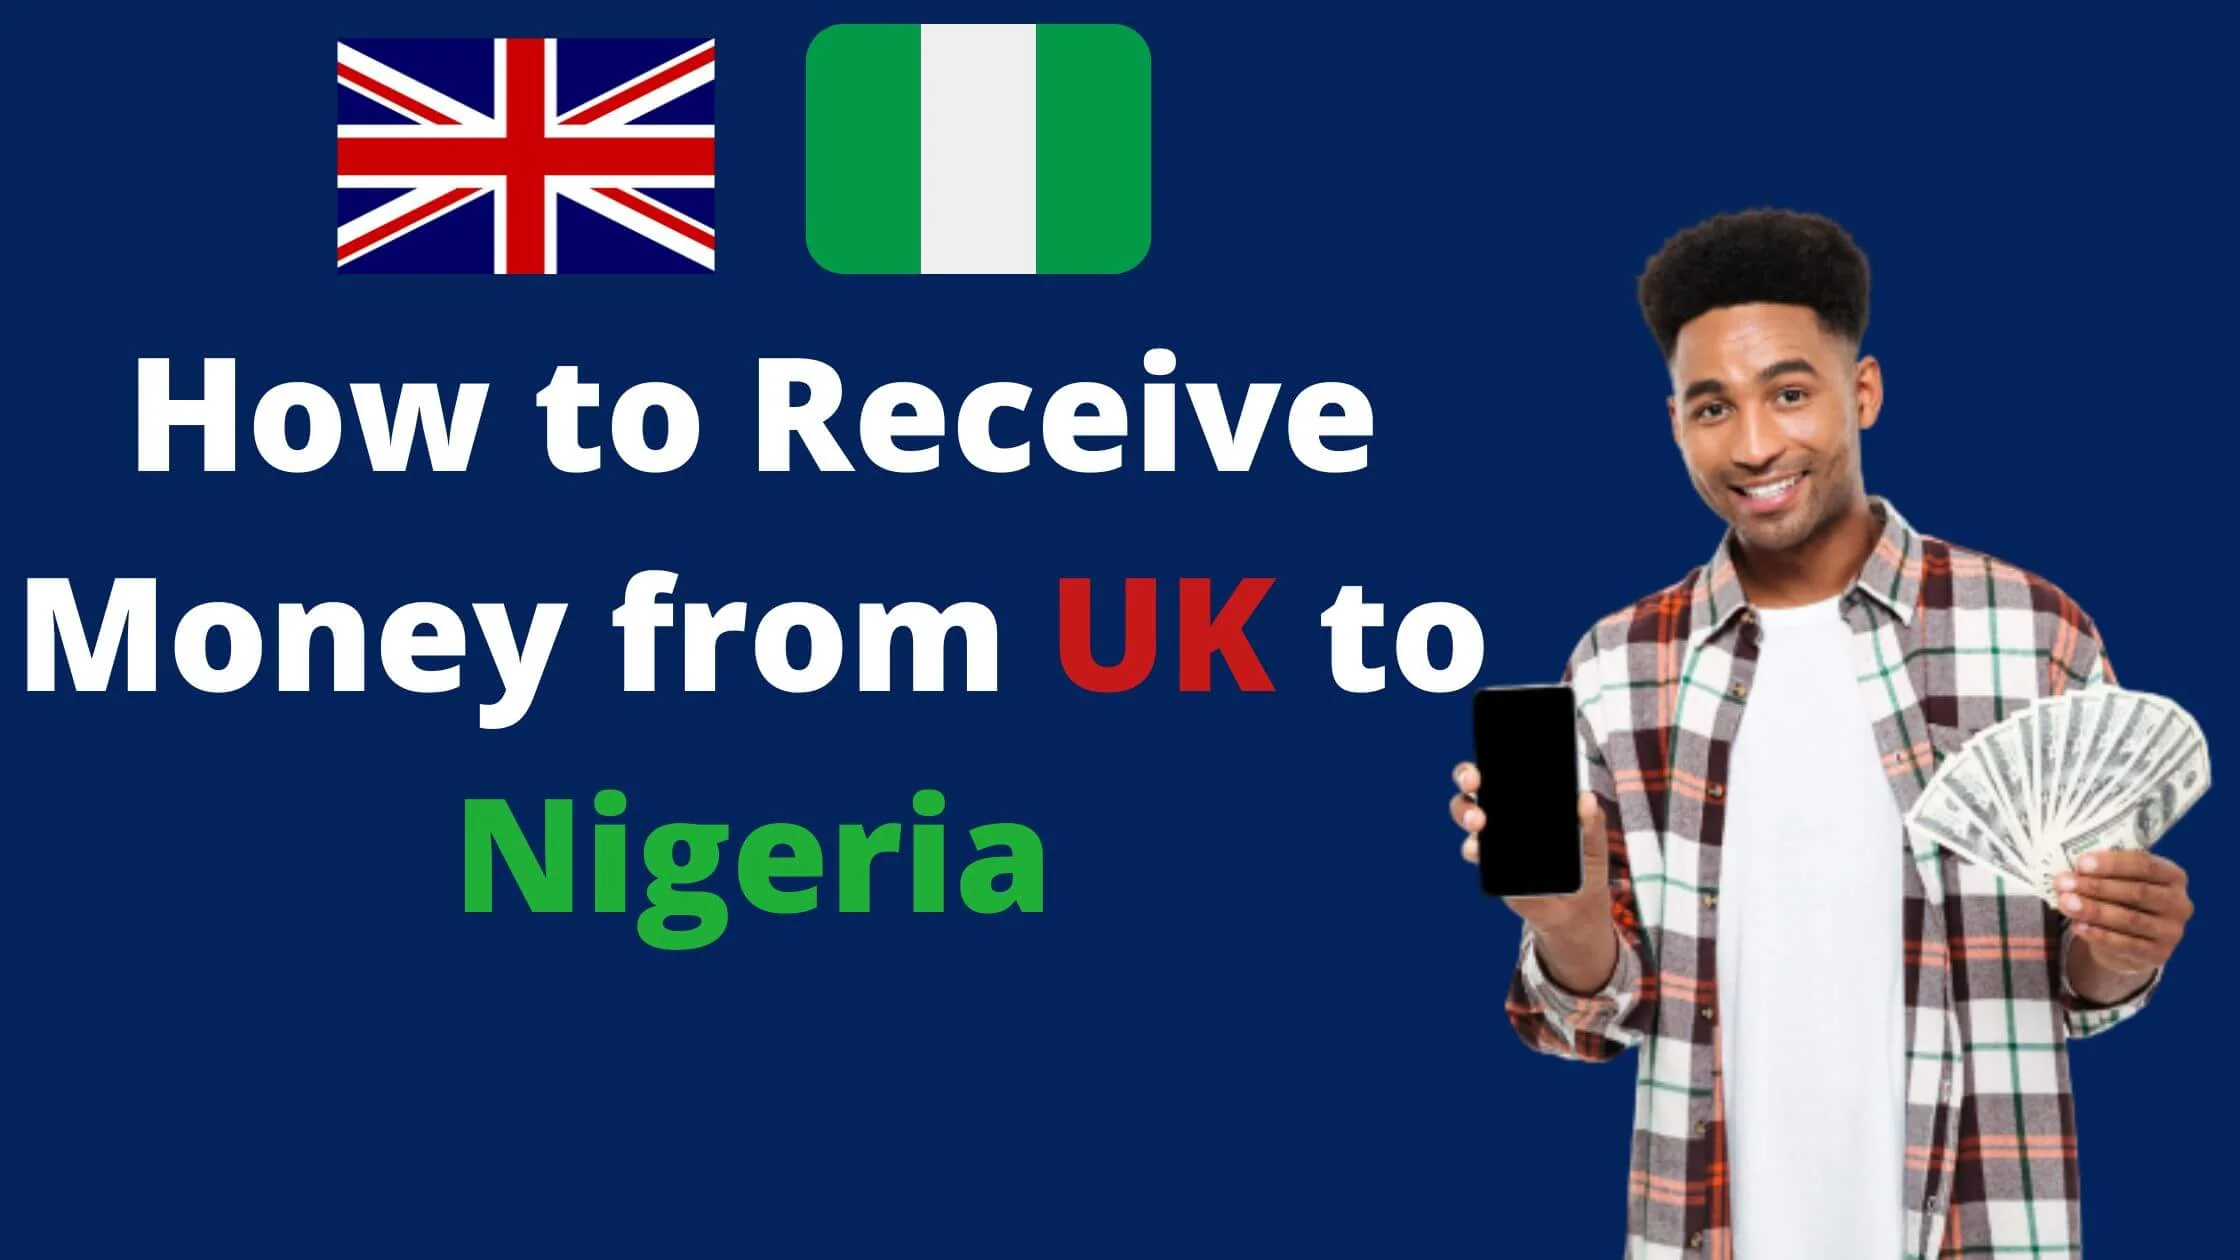 Receive Money from UK to Nigeria